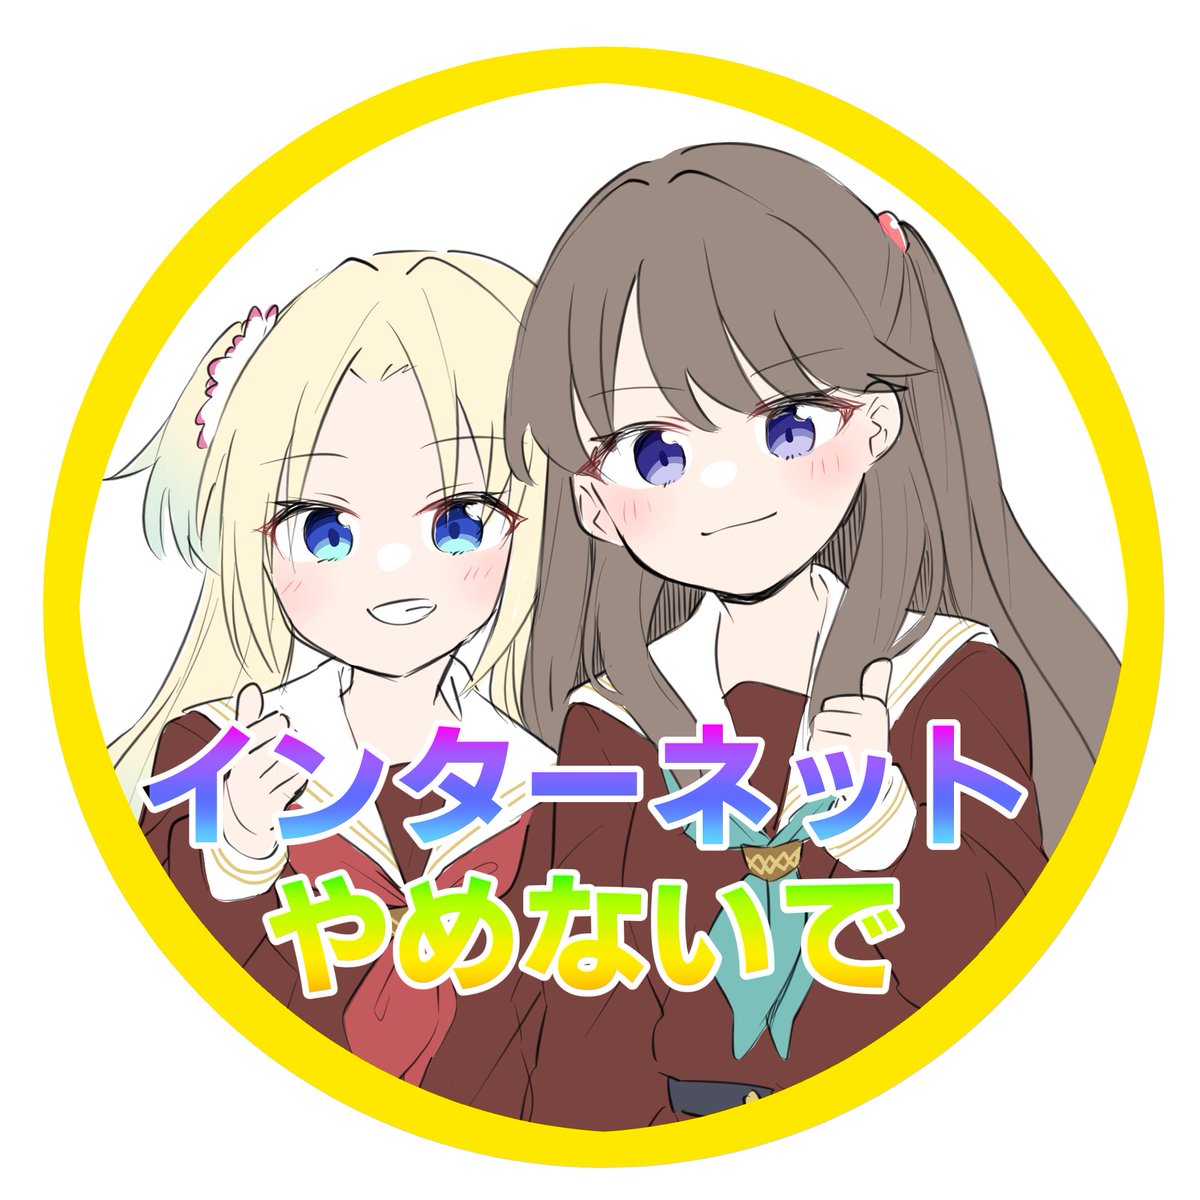 multiple girls 2girls neckerchief school uniform blue eyes blonde hair long hair  illustration images